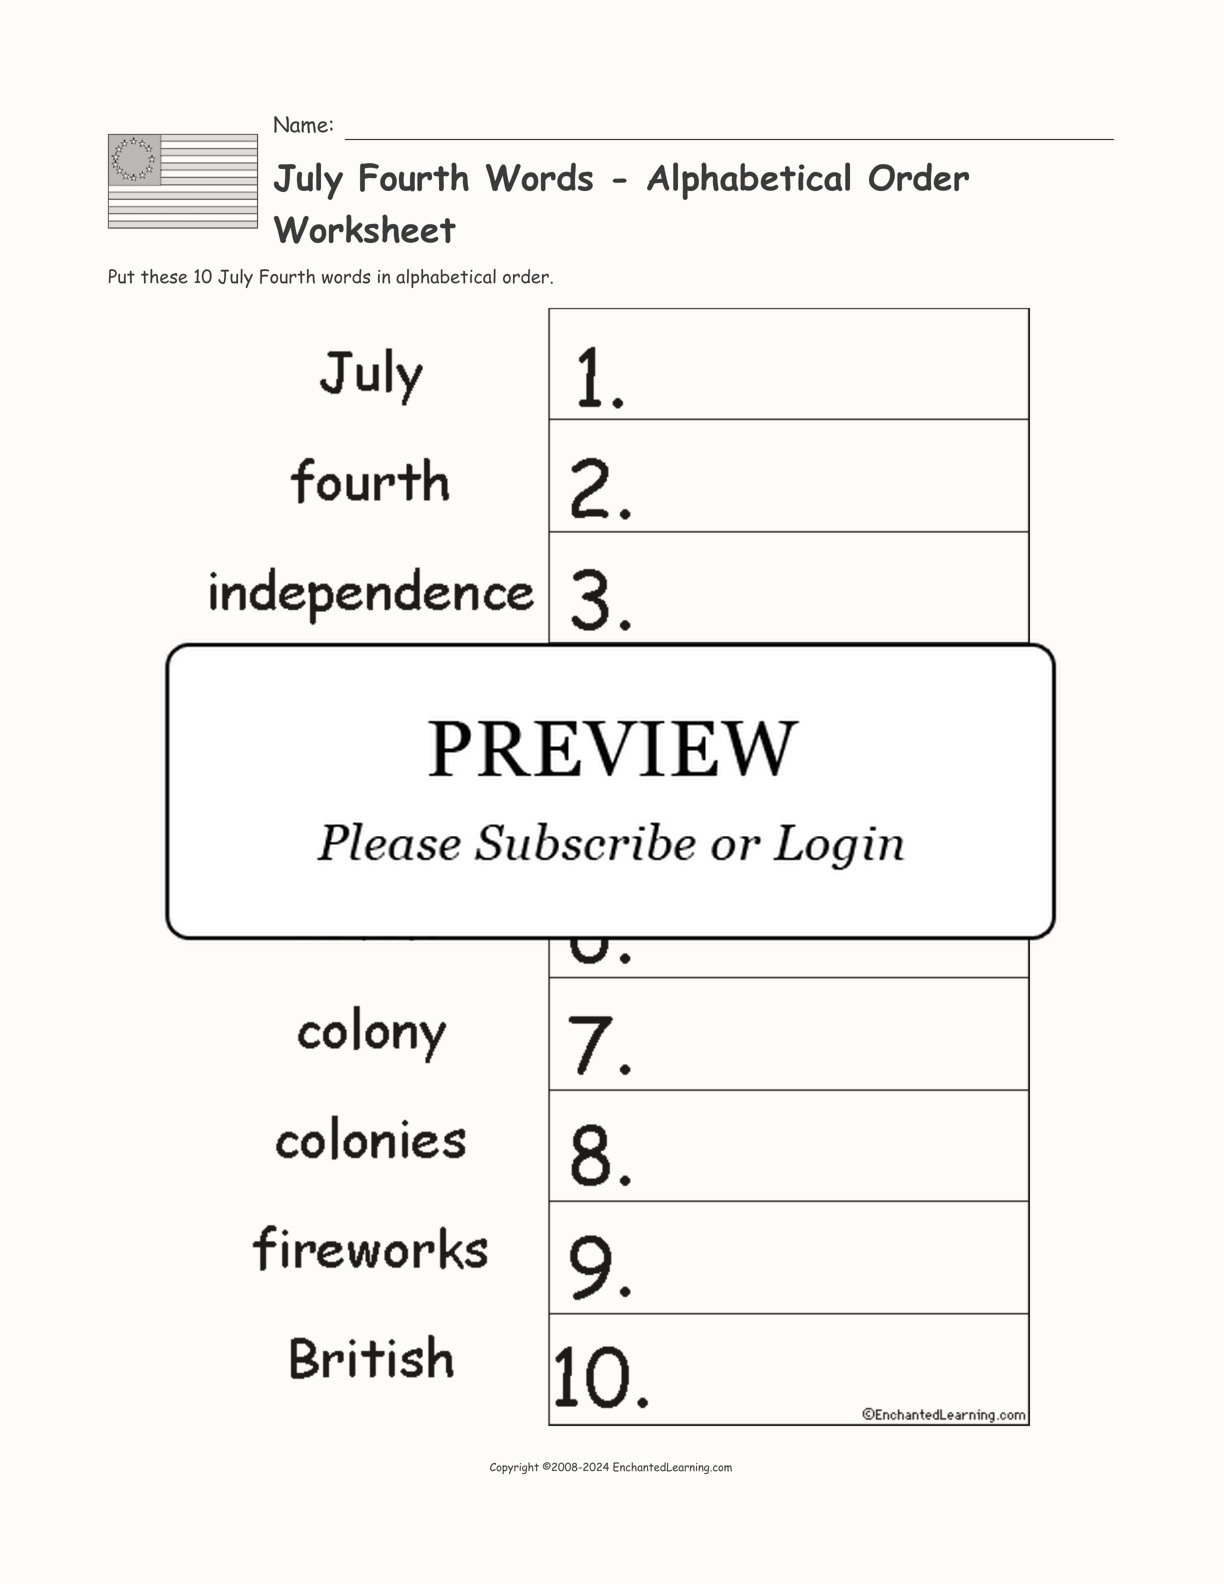 July Fourth Words - Alphabetical Order Worksheet interactive worksheet page 1